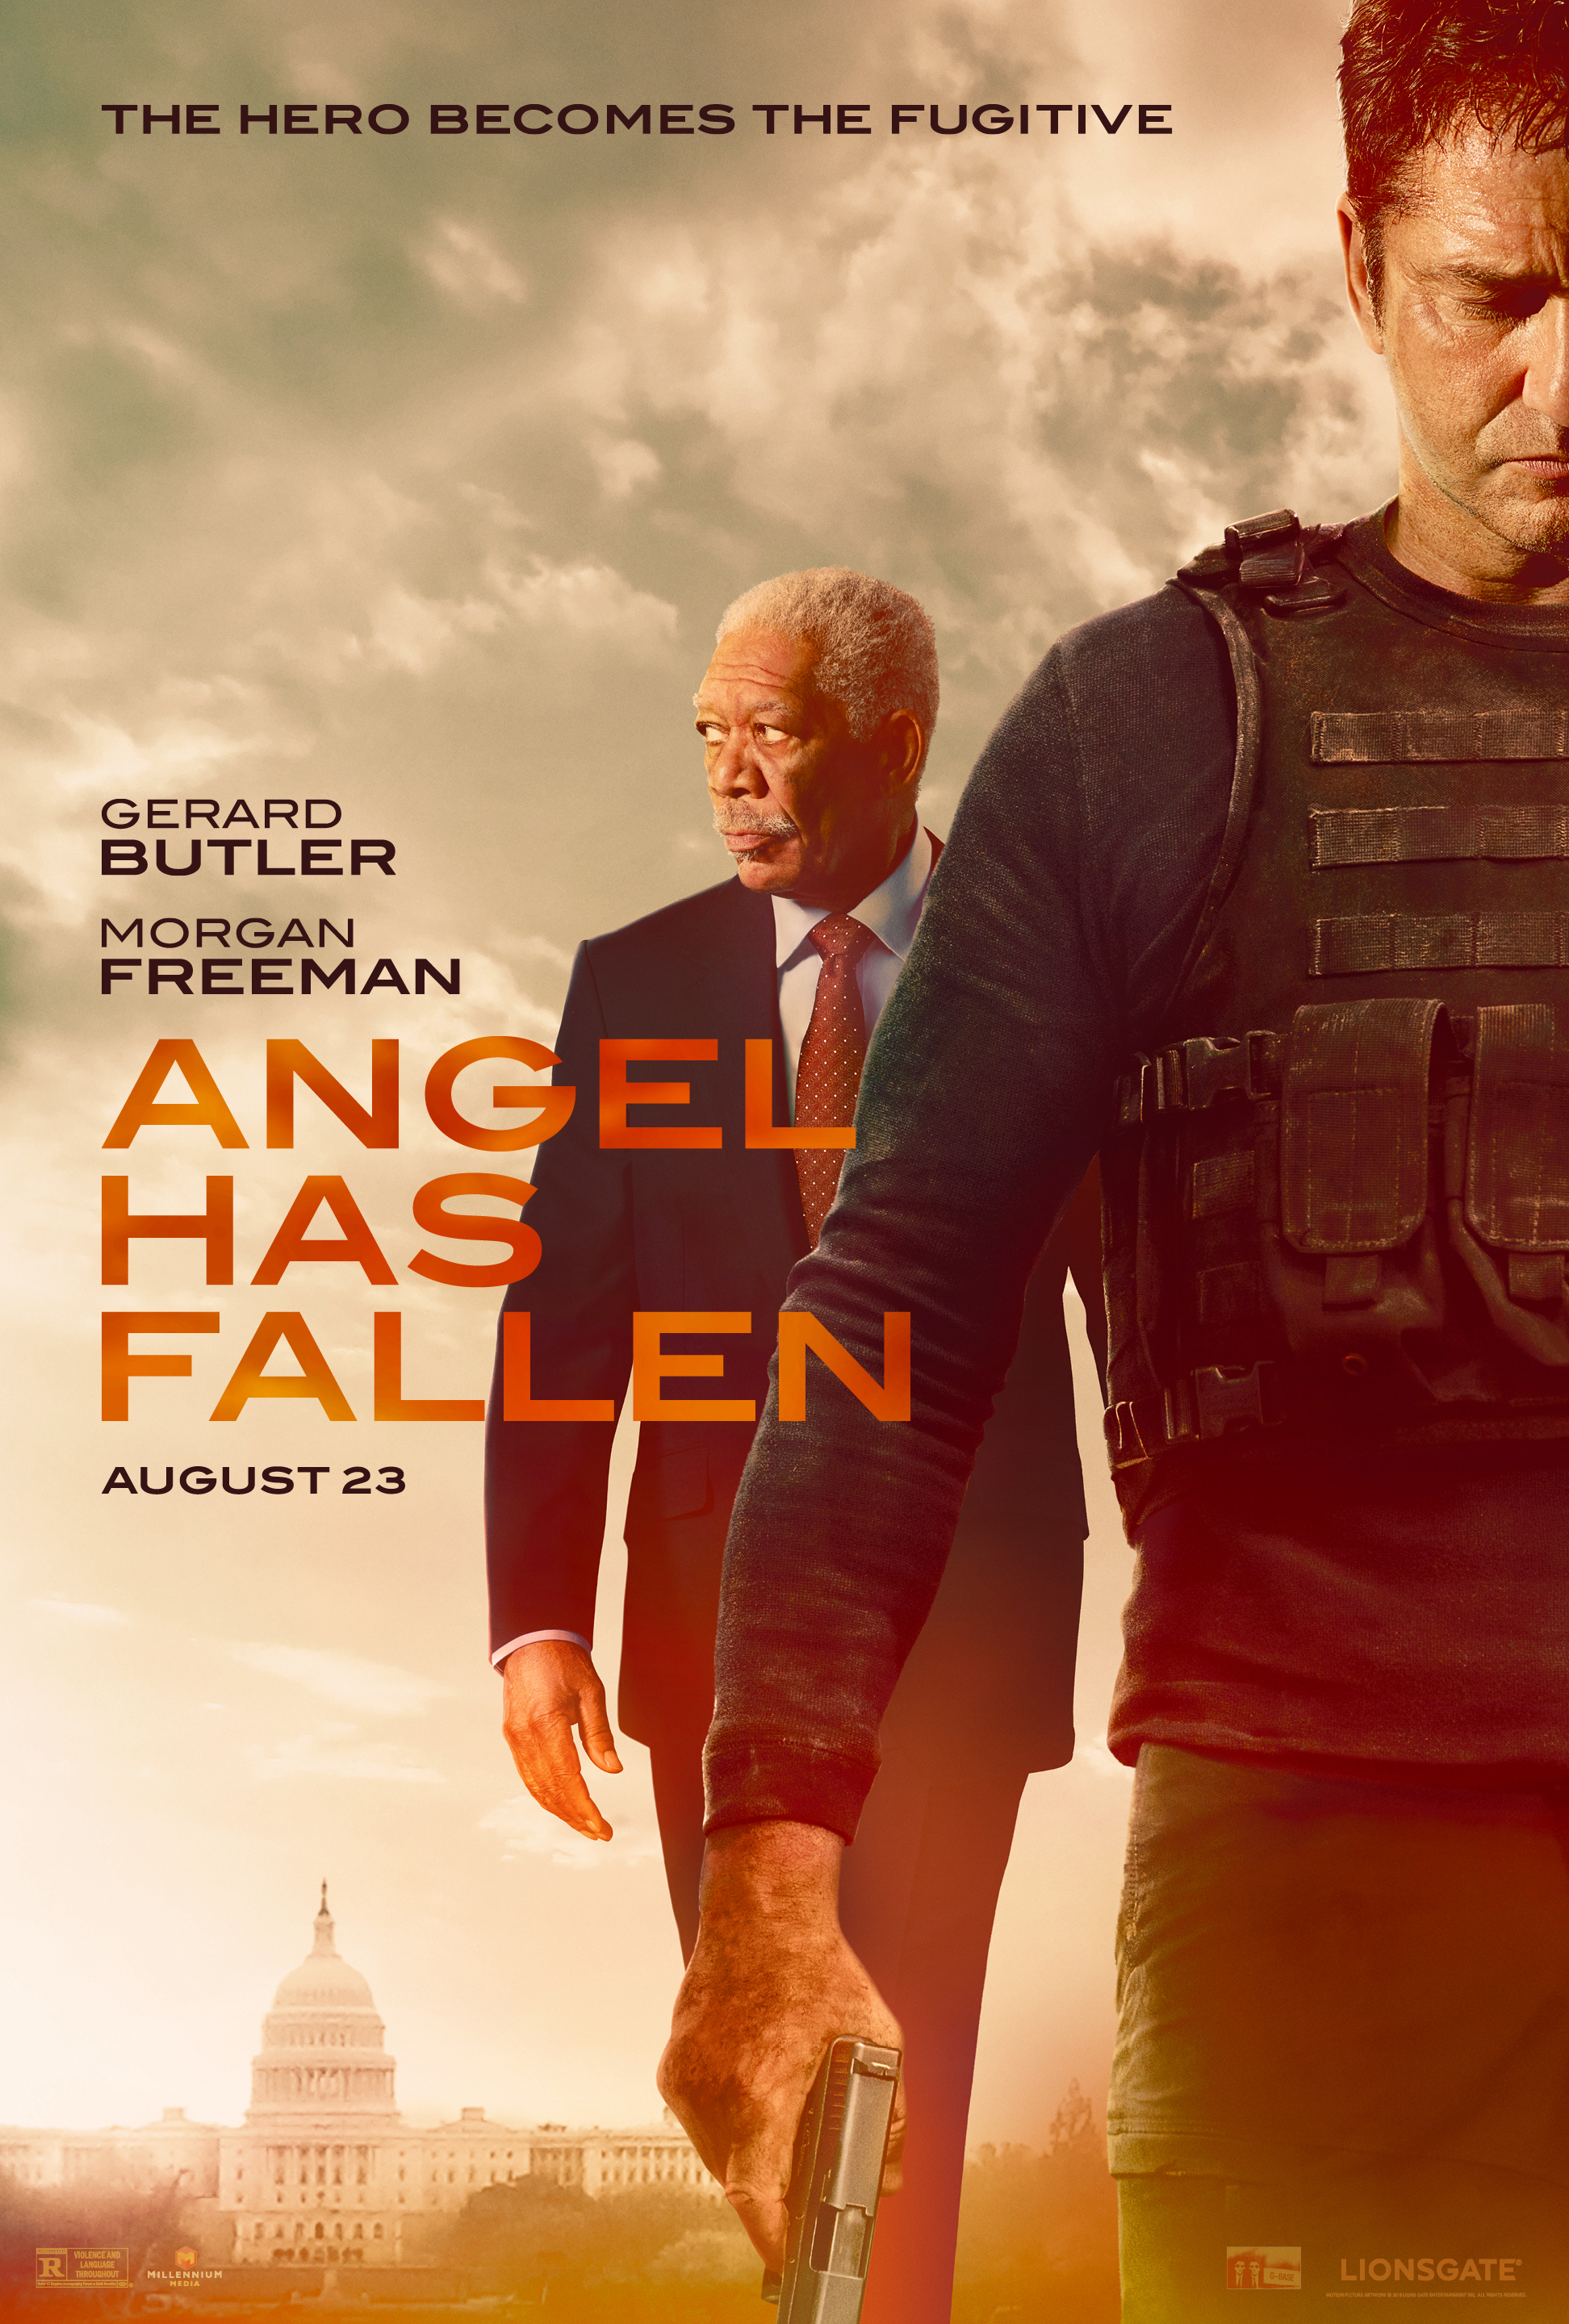 Stiahni si Filmy bez titulků Pad andela / Angel Has Fallen (2019)[WebRip] = CSFD 63%